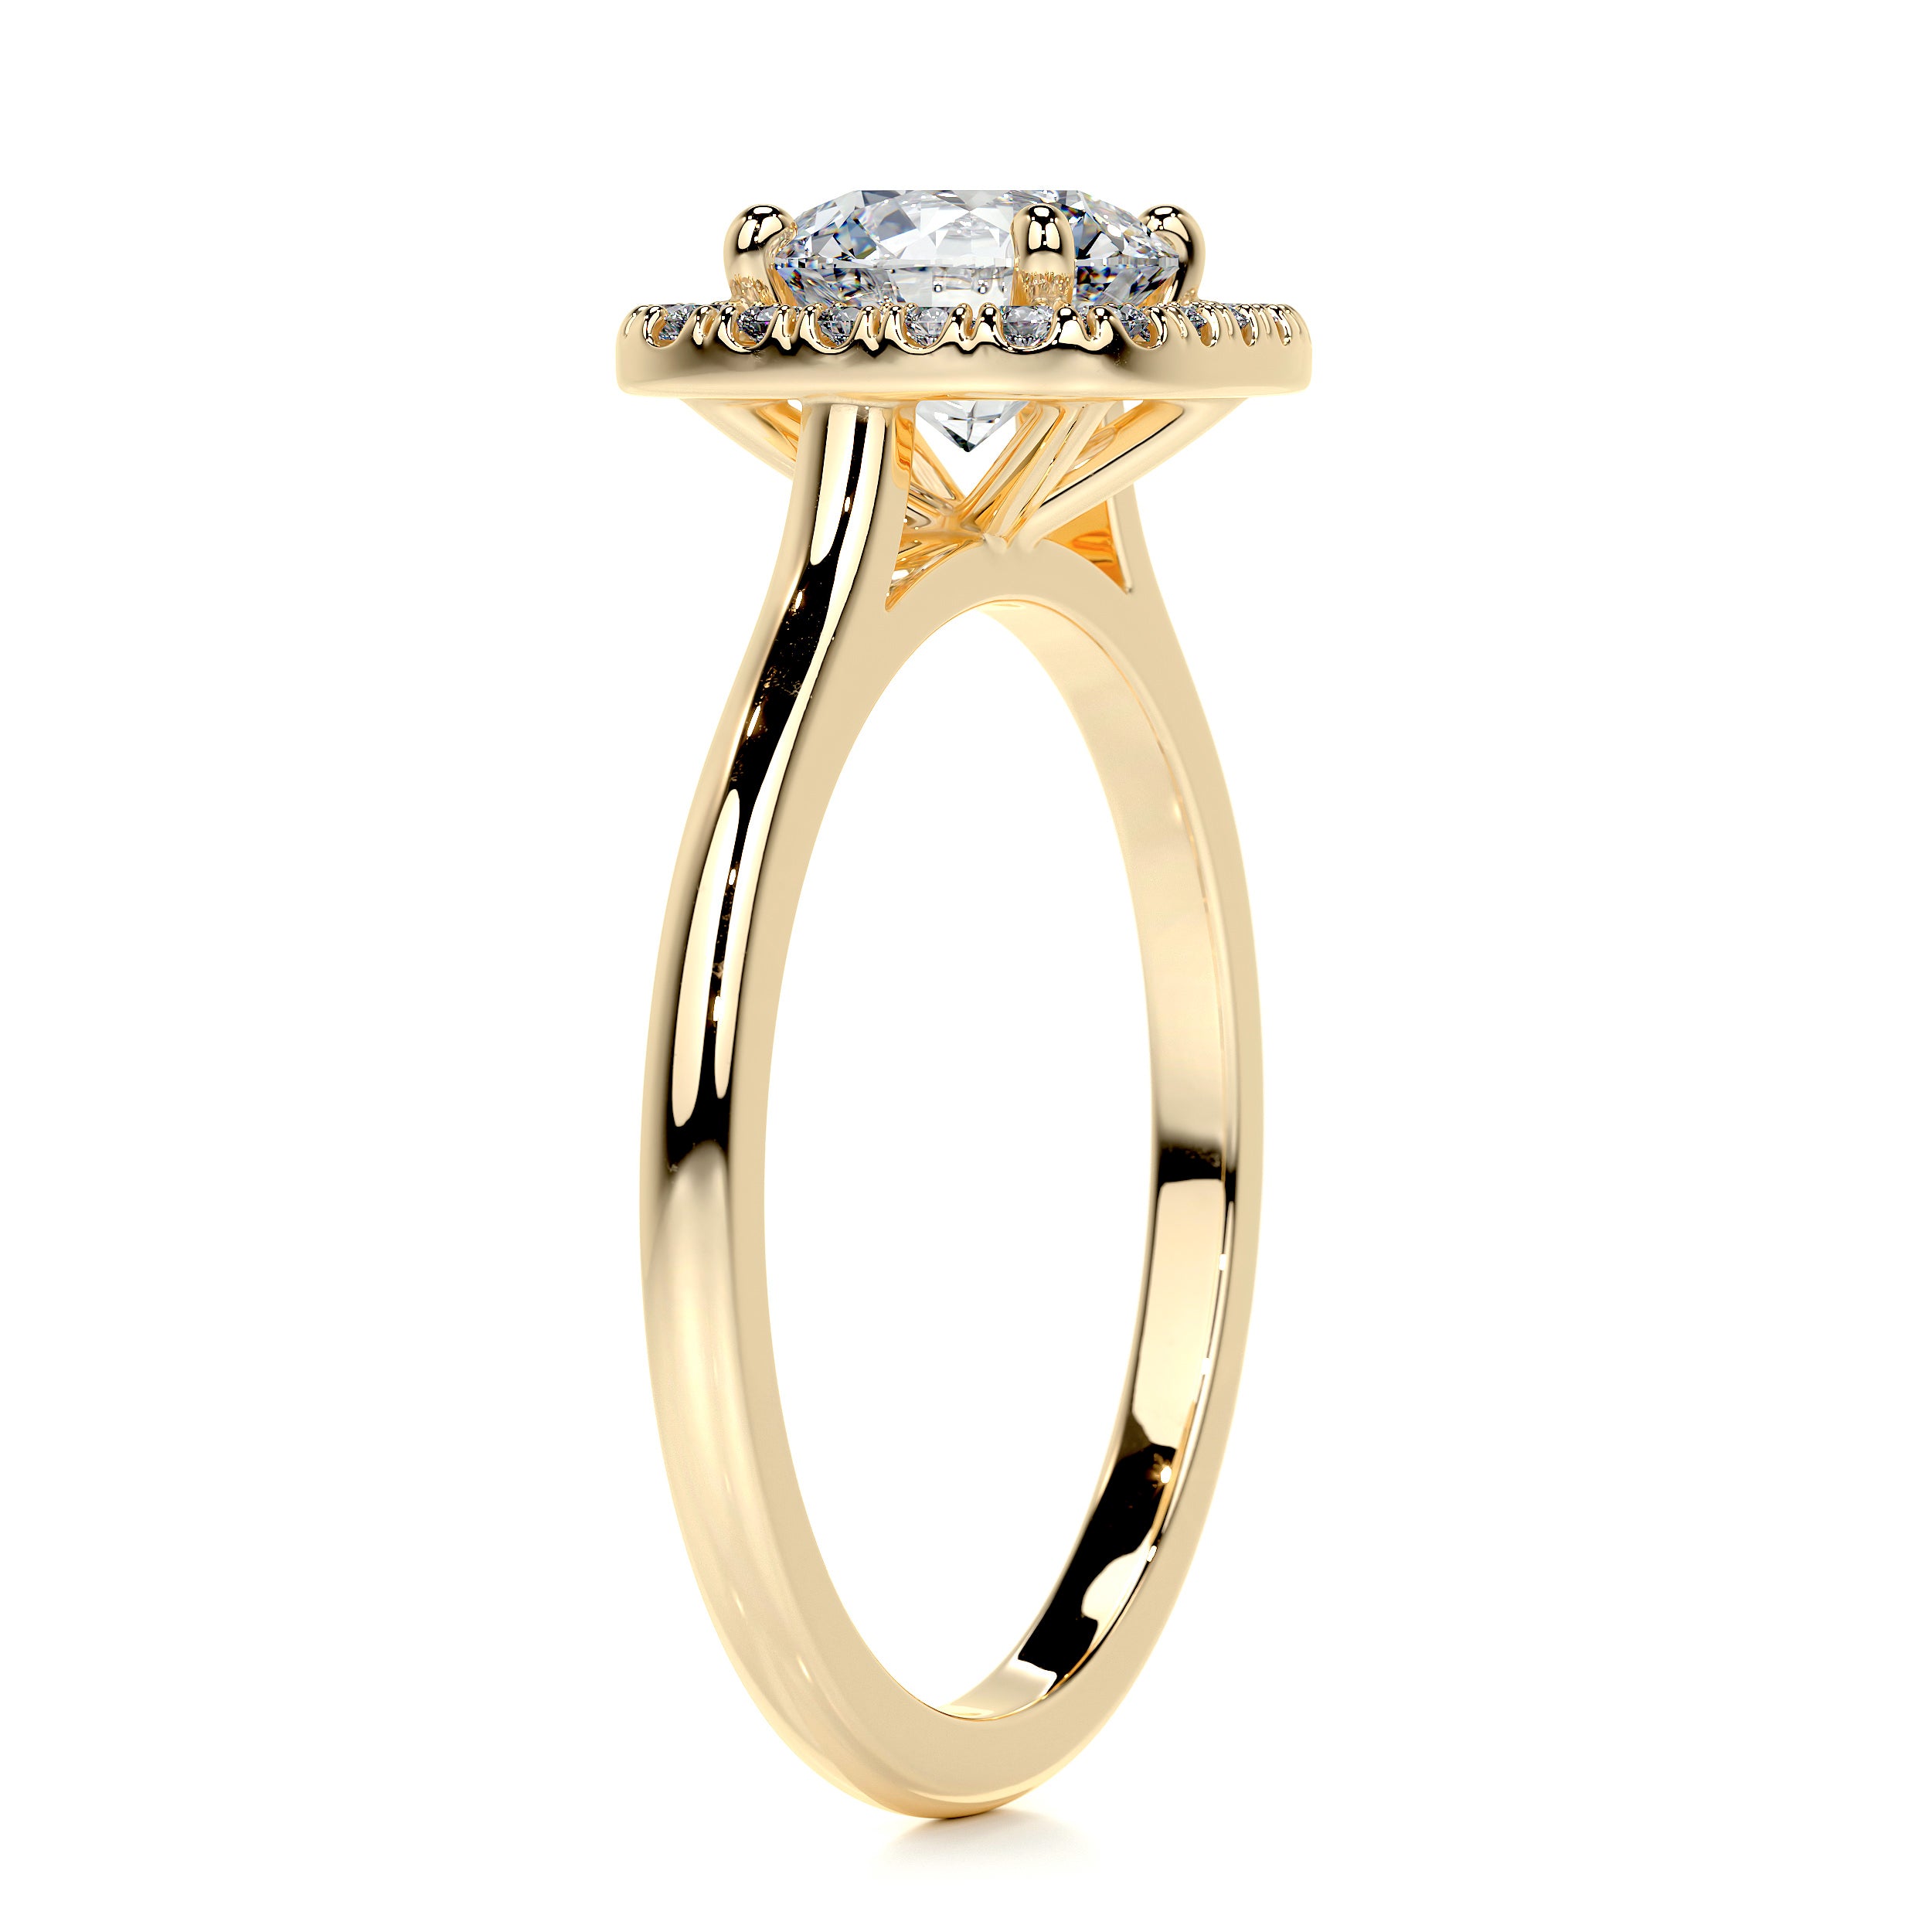 Claudia Diamond Engagement Ring -18K Yellow Gold